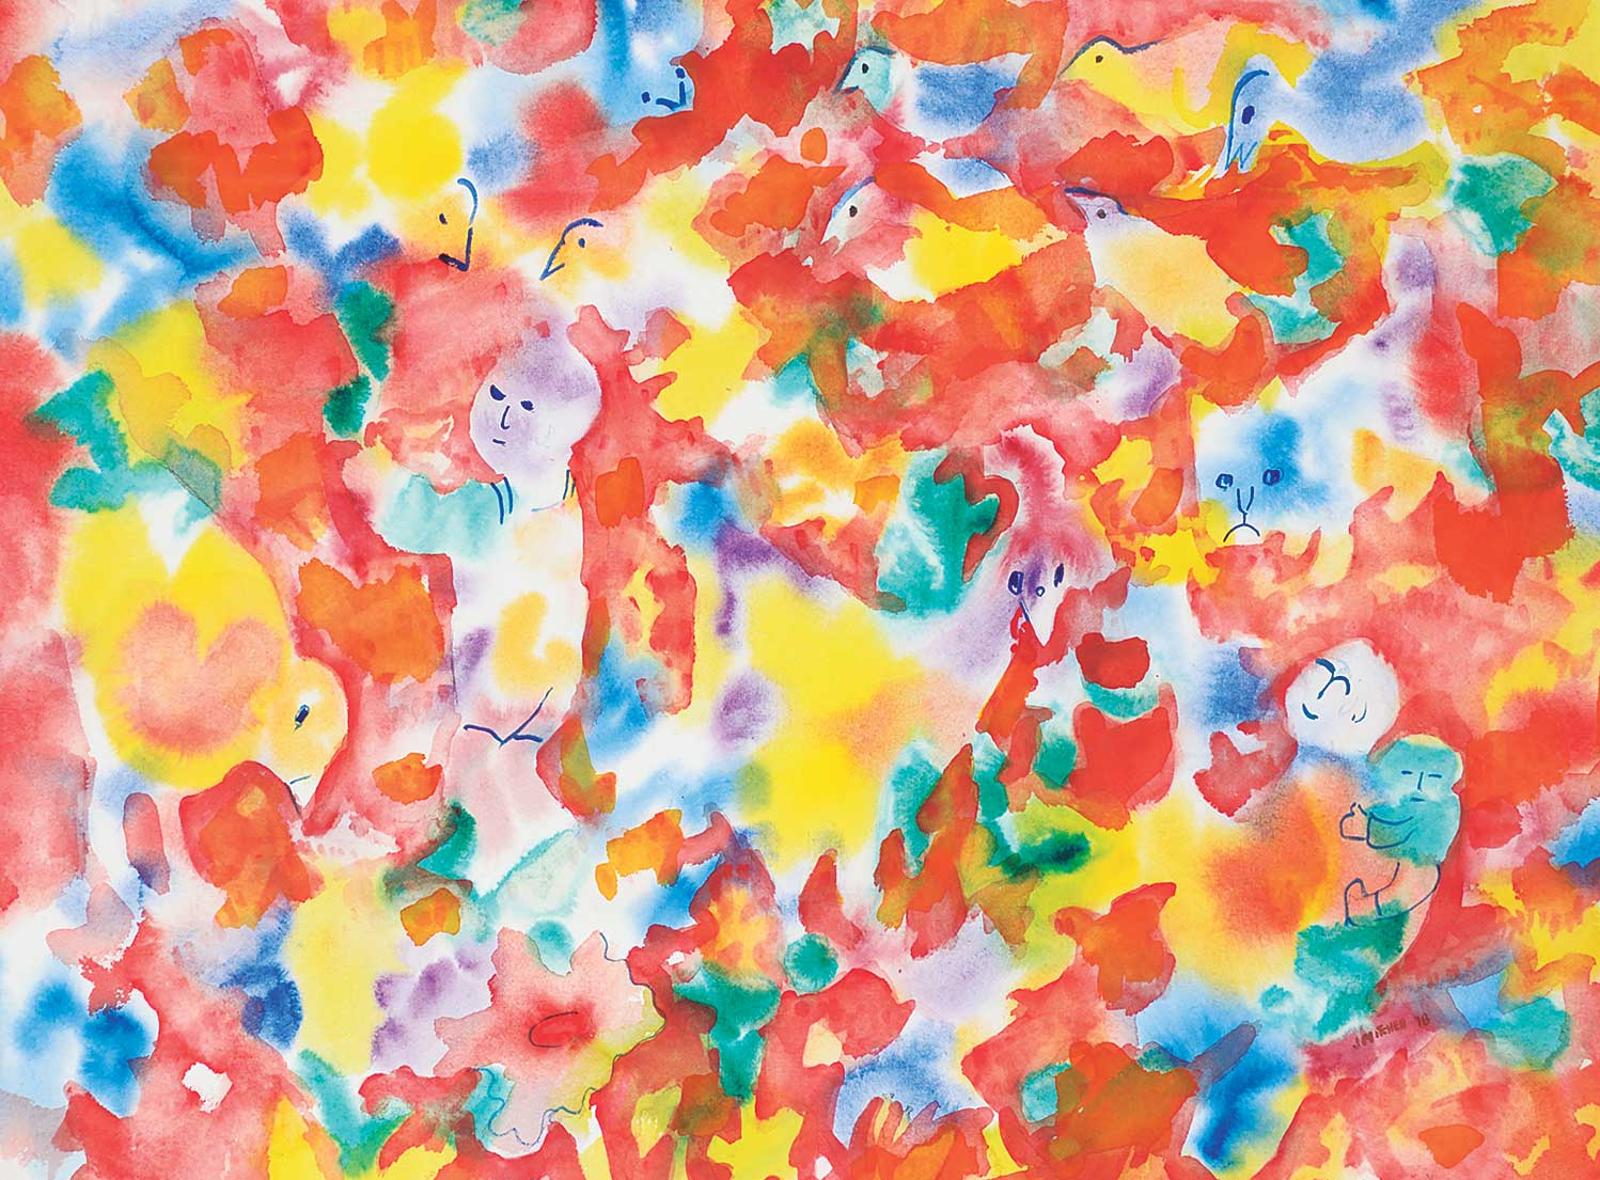 Janet Mitchell (1915-1998) - Untitled - A Colourful Neighbourhood